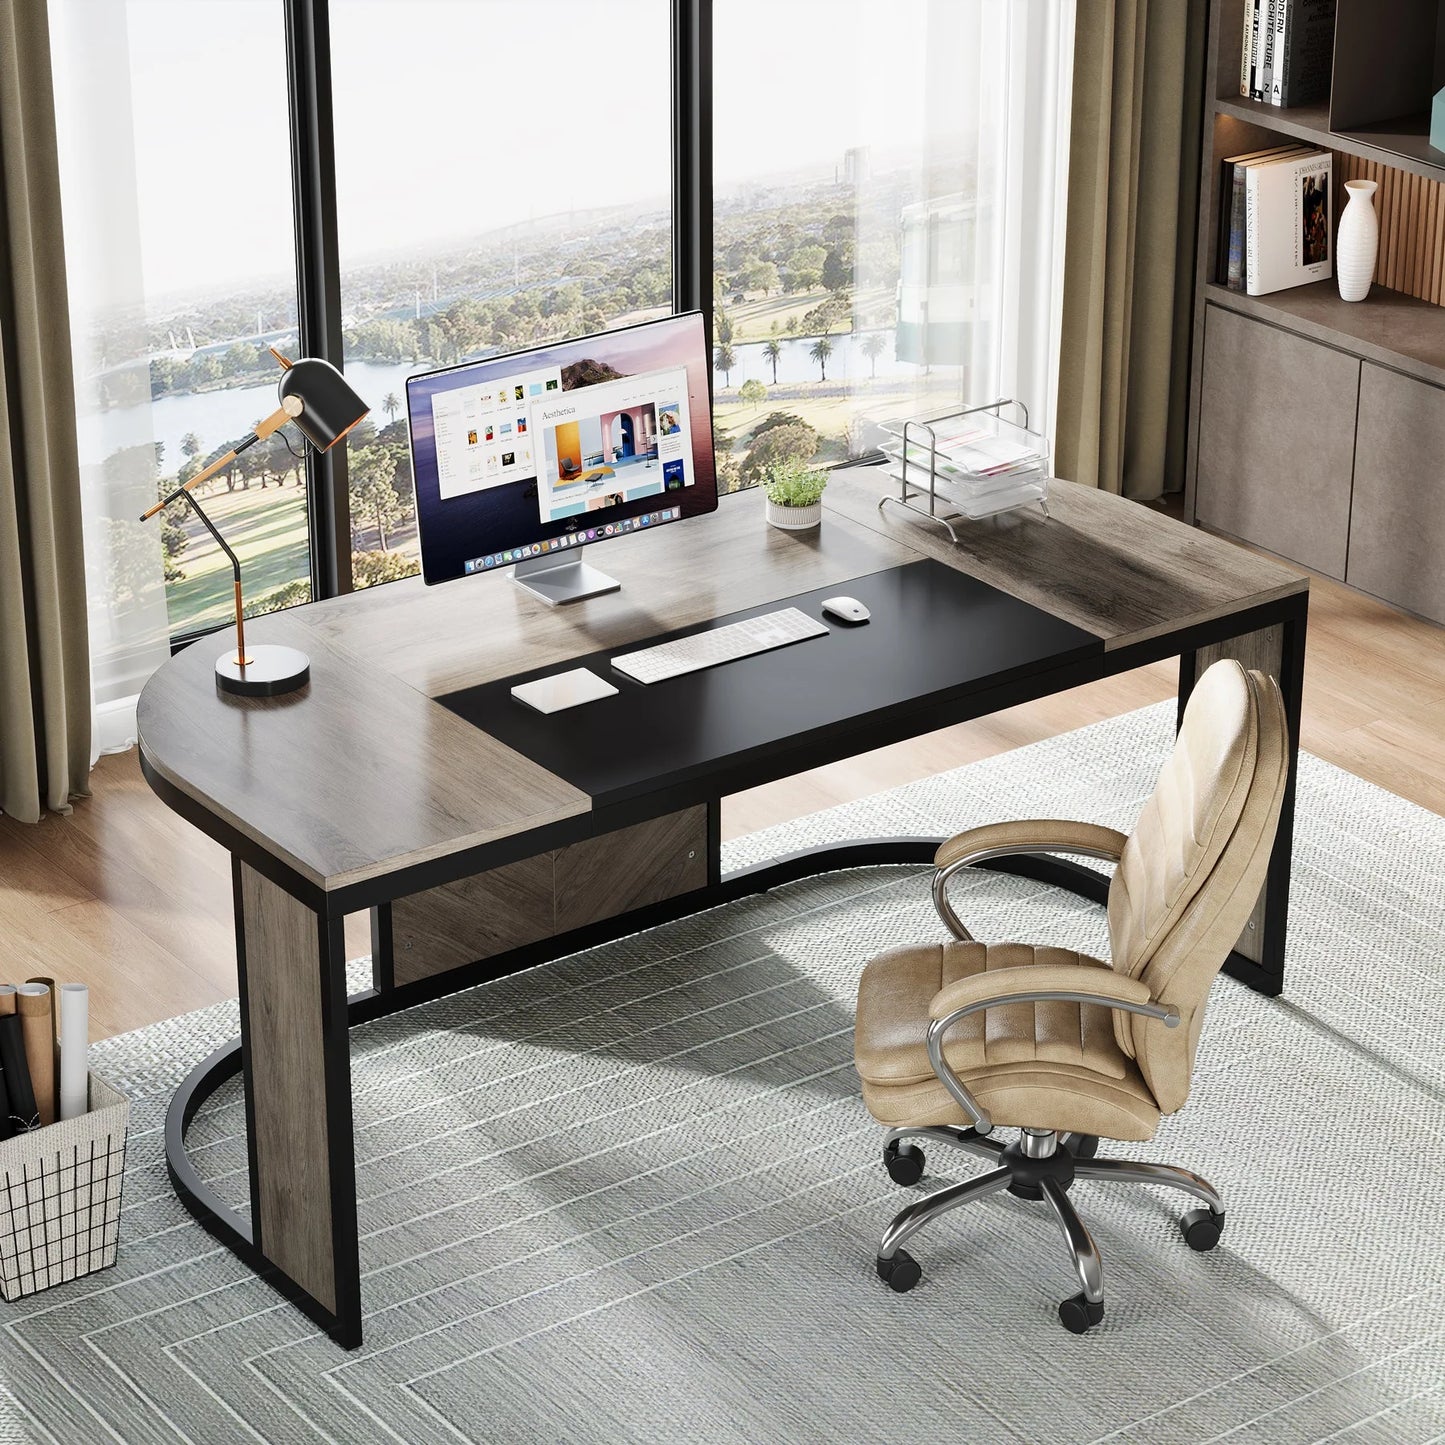 63" Executive Desk, Modern Computer Desk with Spliced Tabletop